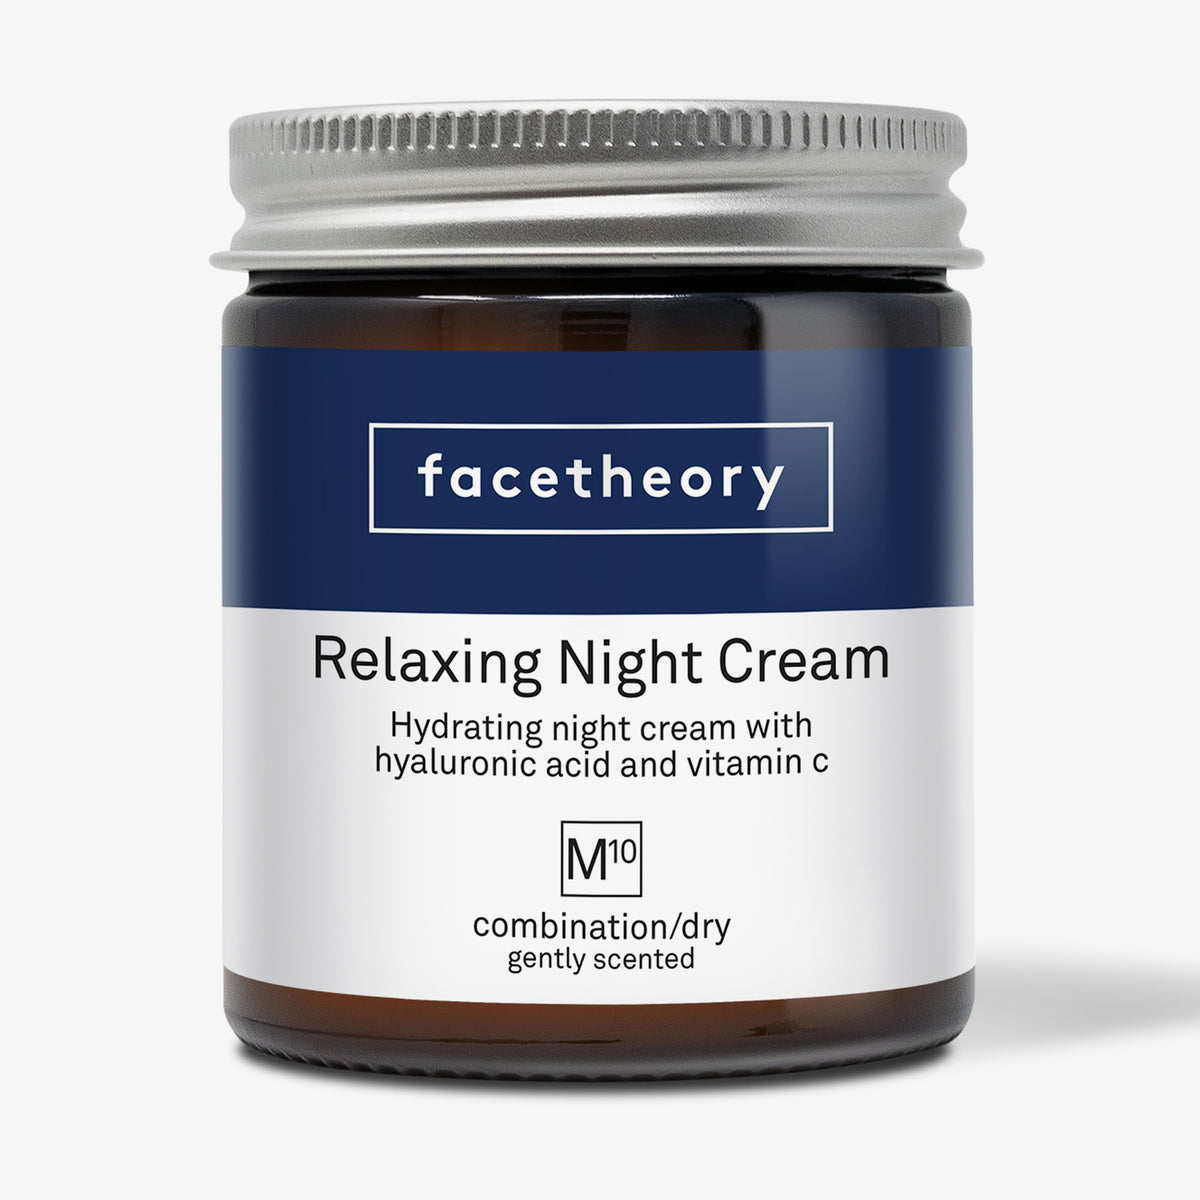 facetheory | Relaxing Night Cream M10